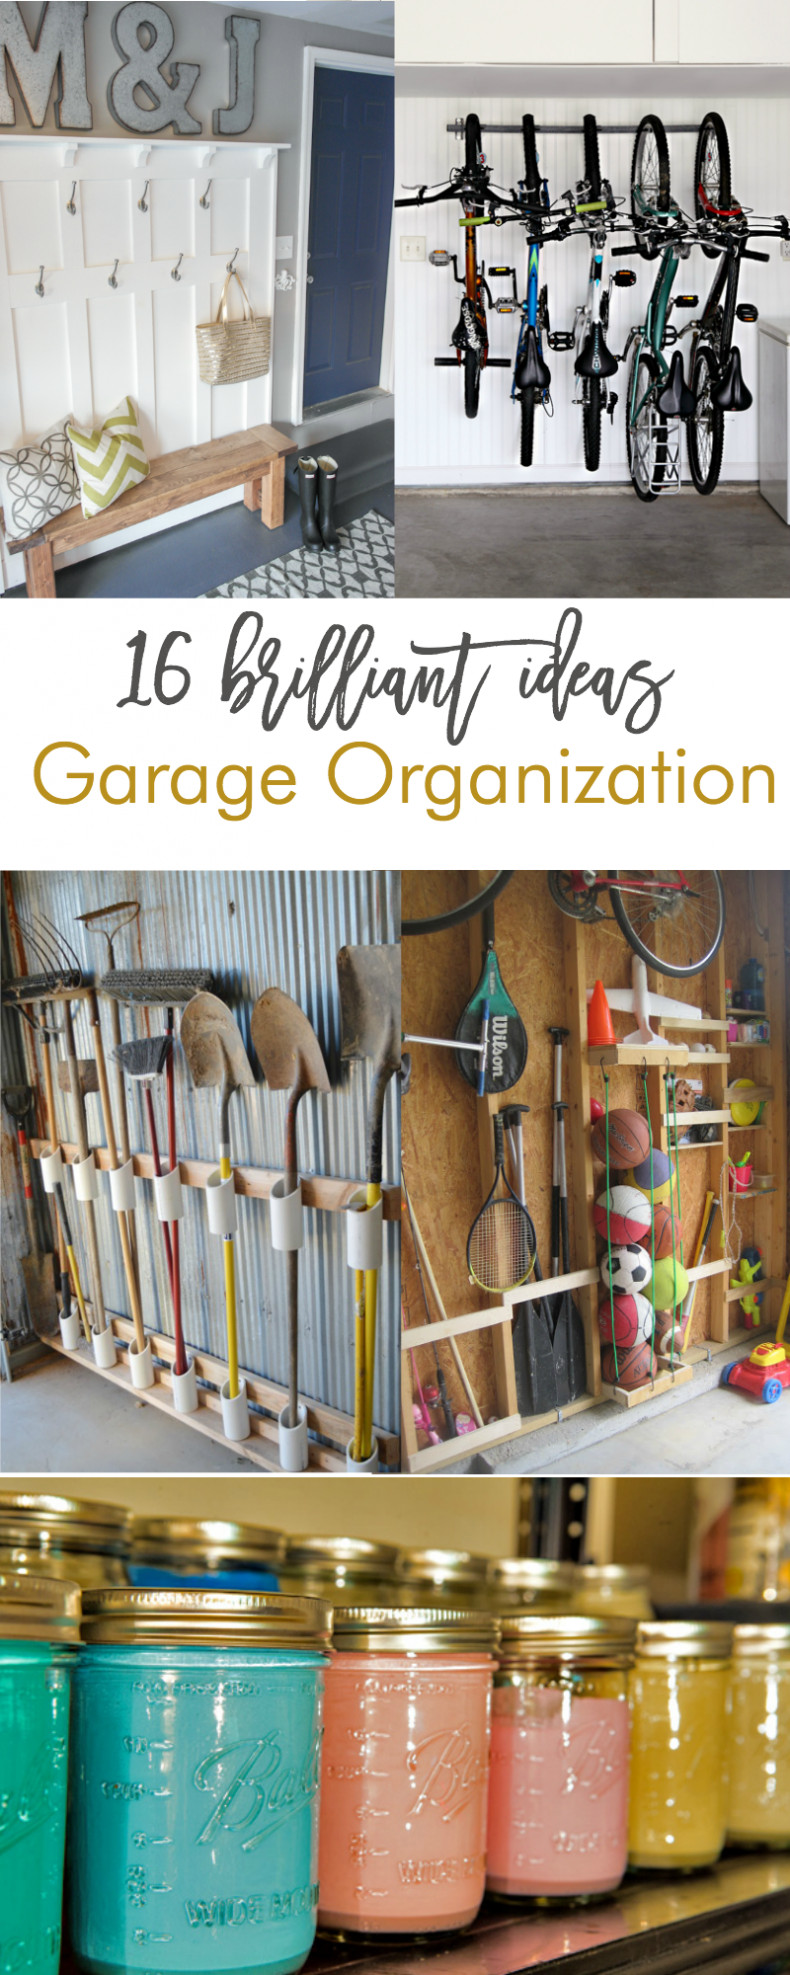 Diy Garage organizers Lovely 16 Brilliant Diy Garage organization Ideas